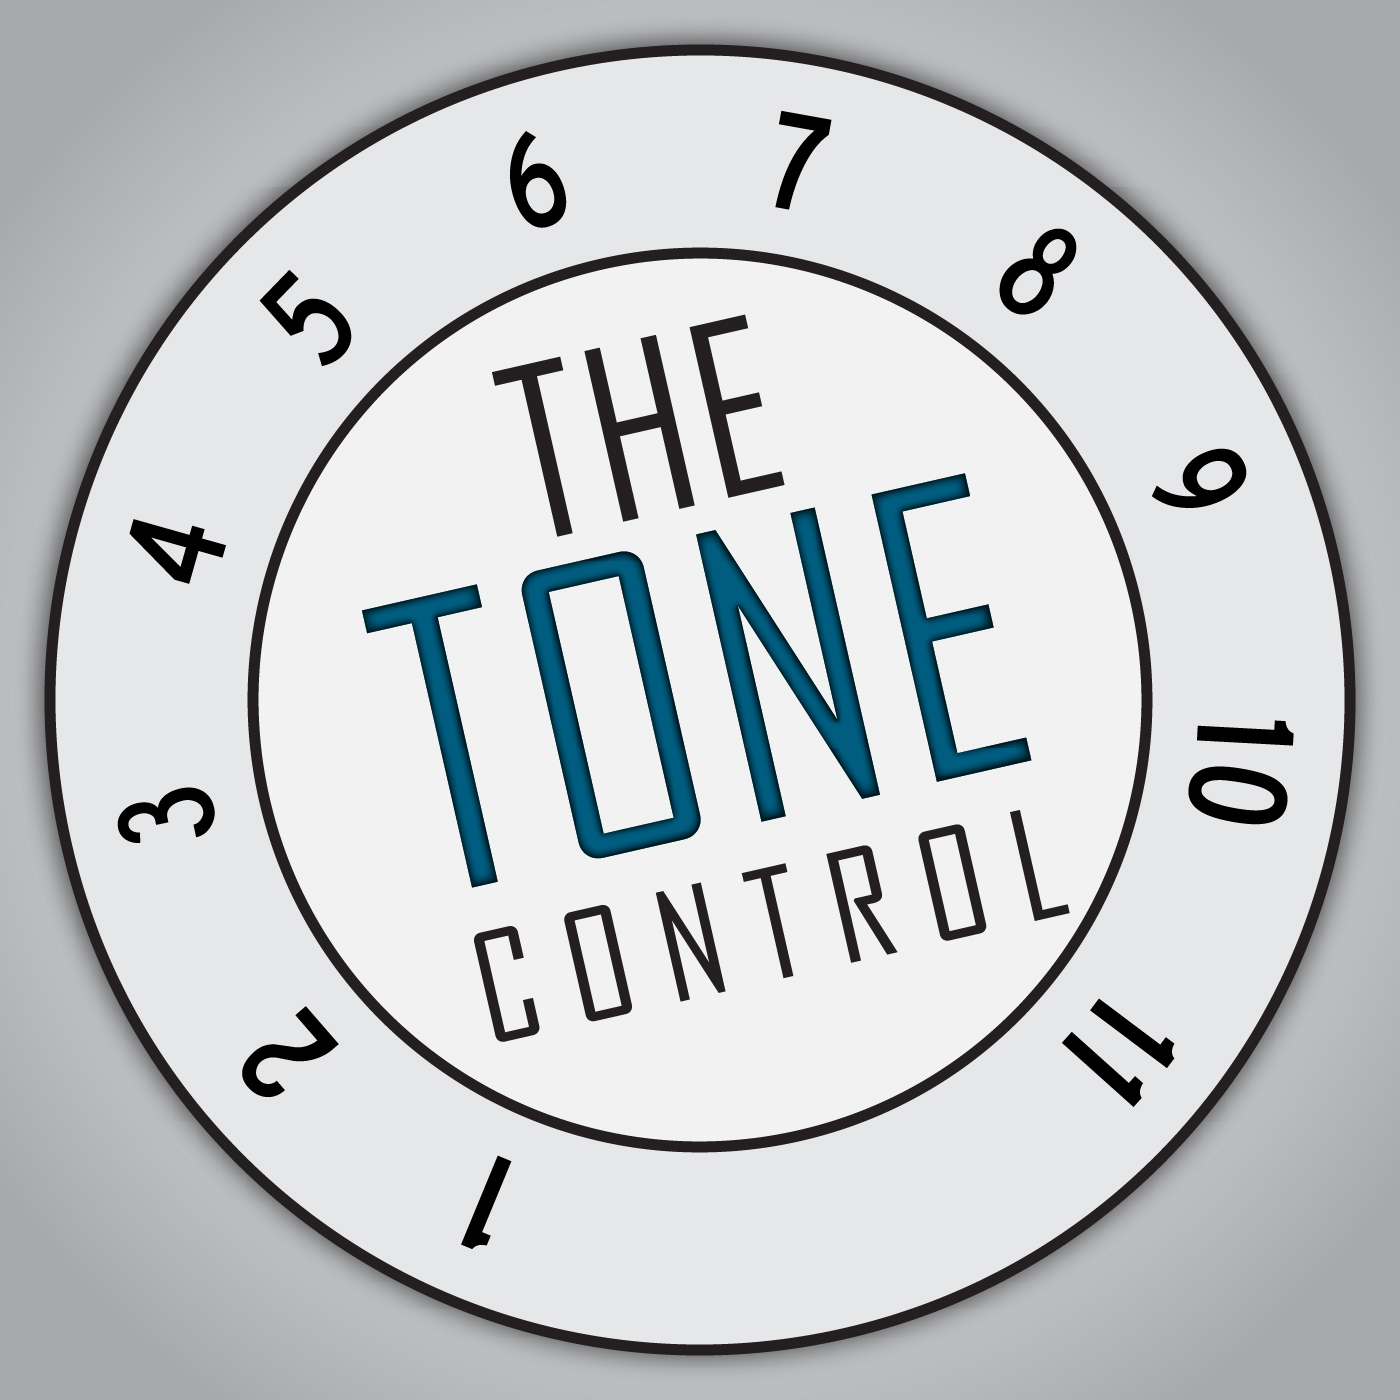 The Tone Control